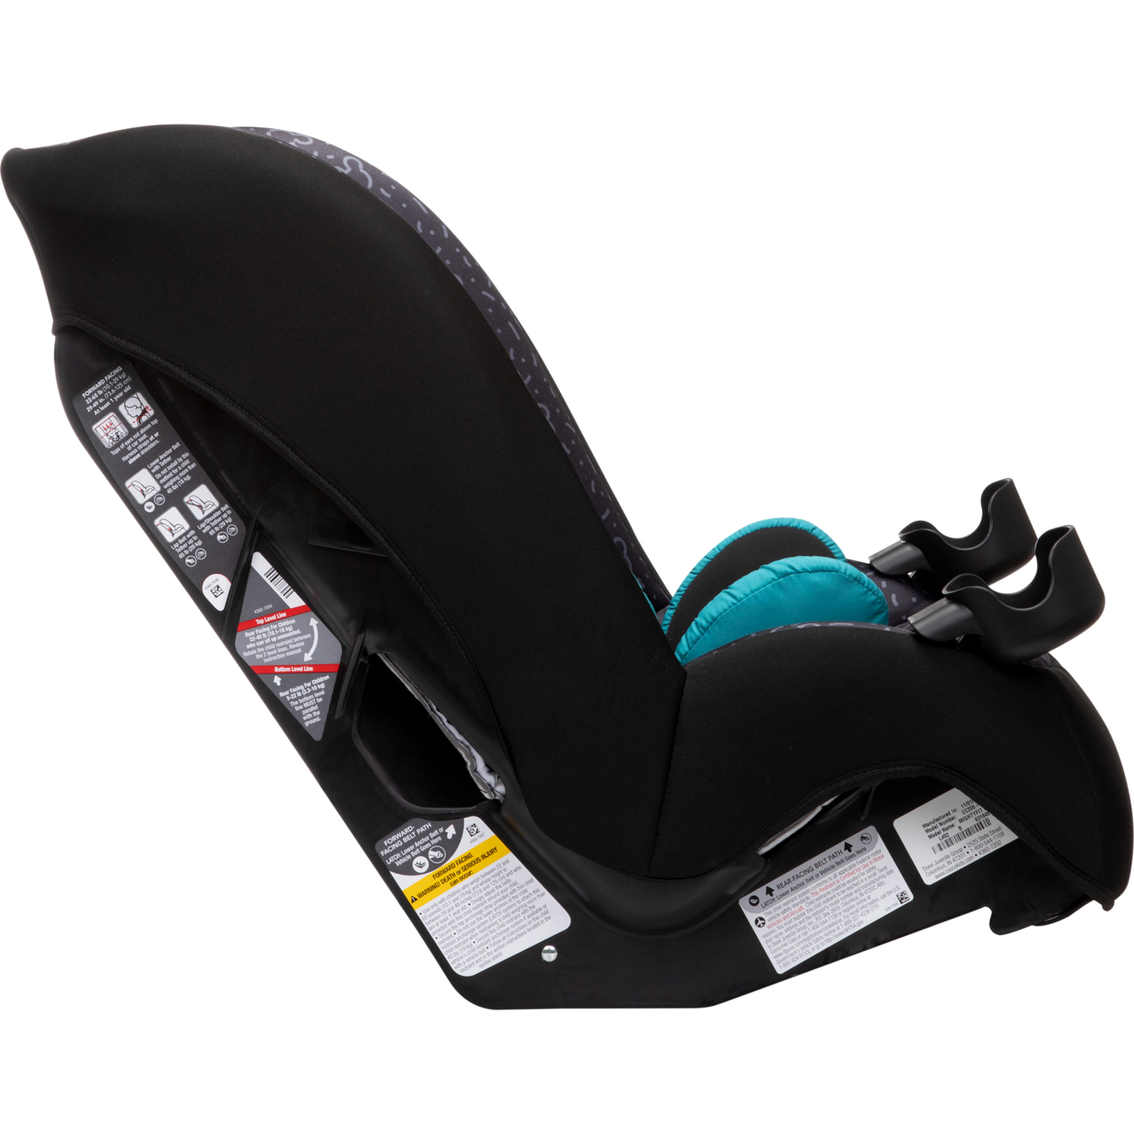 Disney Baby Jive 2 in 1 Convertible Car Seat - Image 9 of 10